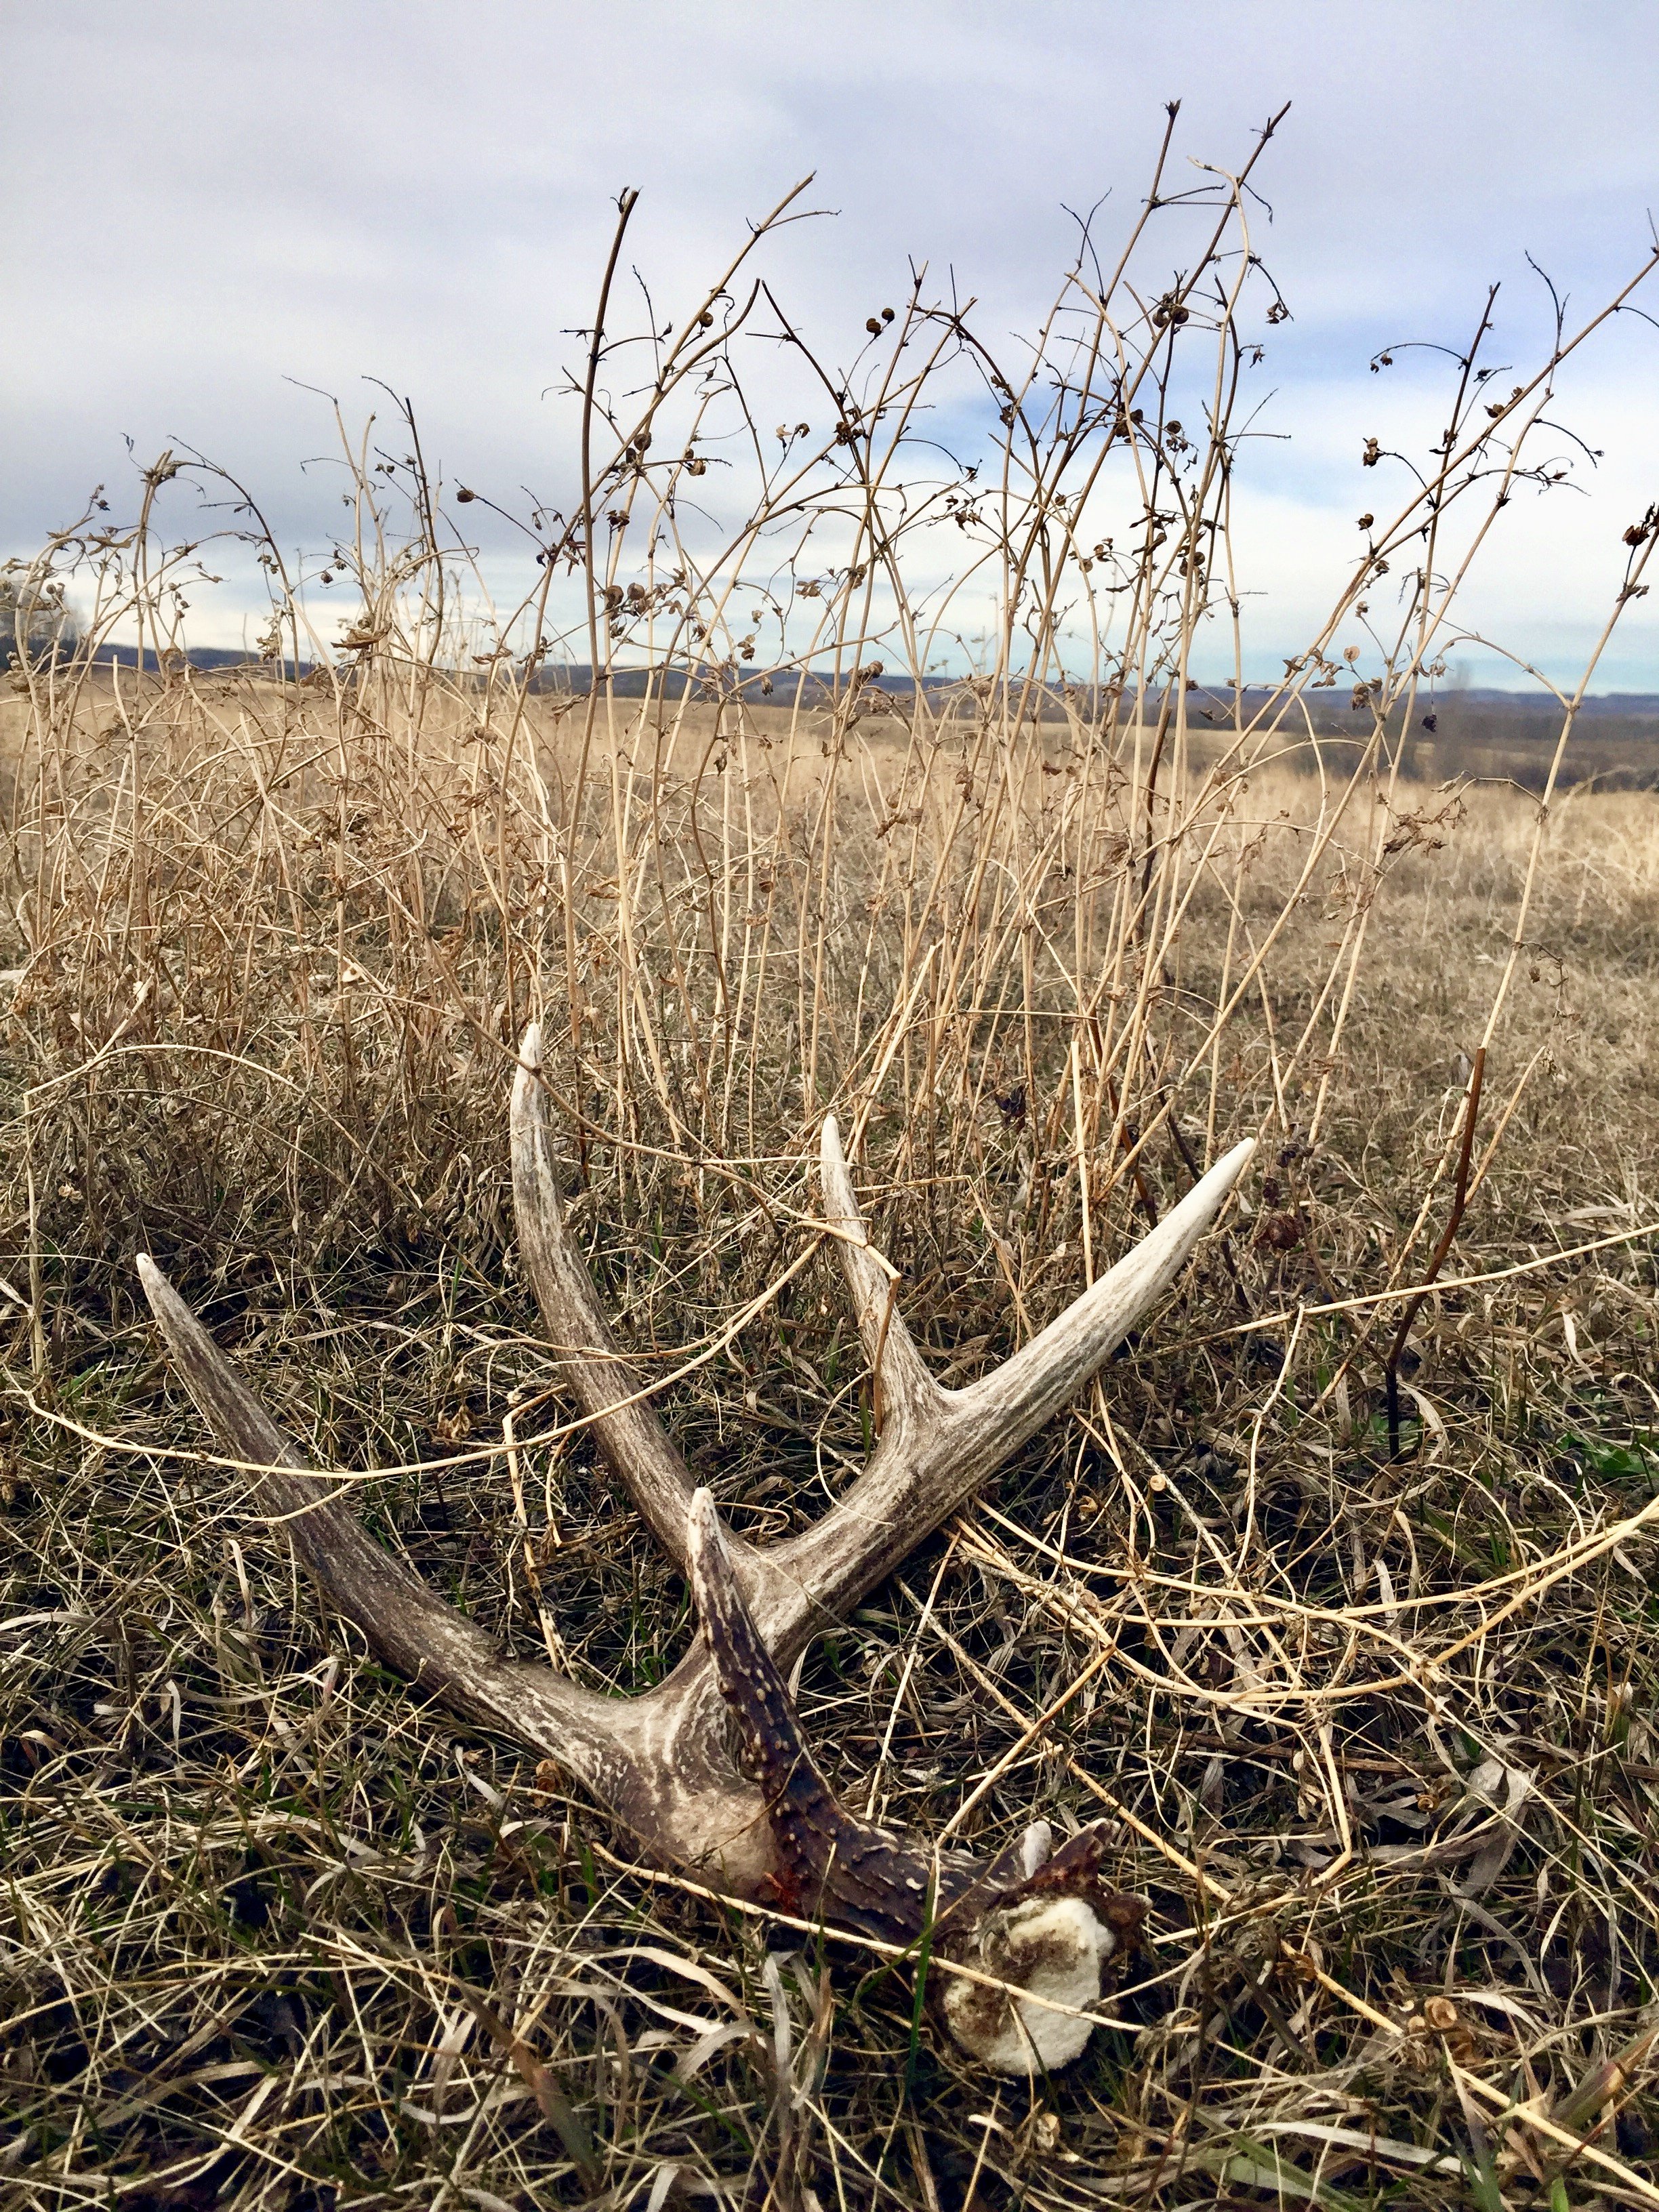 Moose Antler Shed Hunting